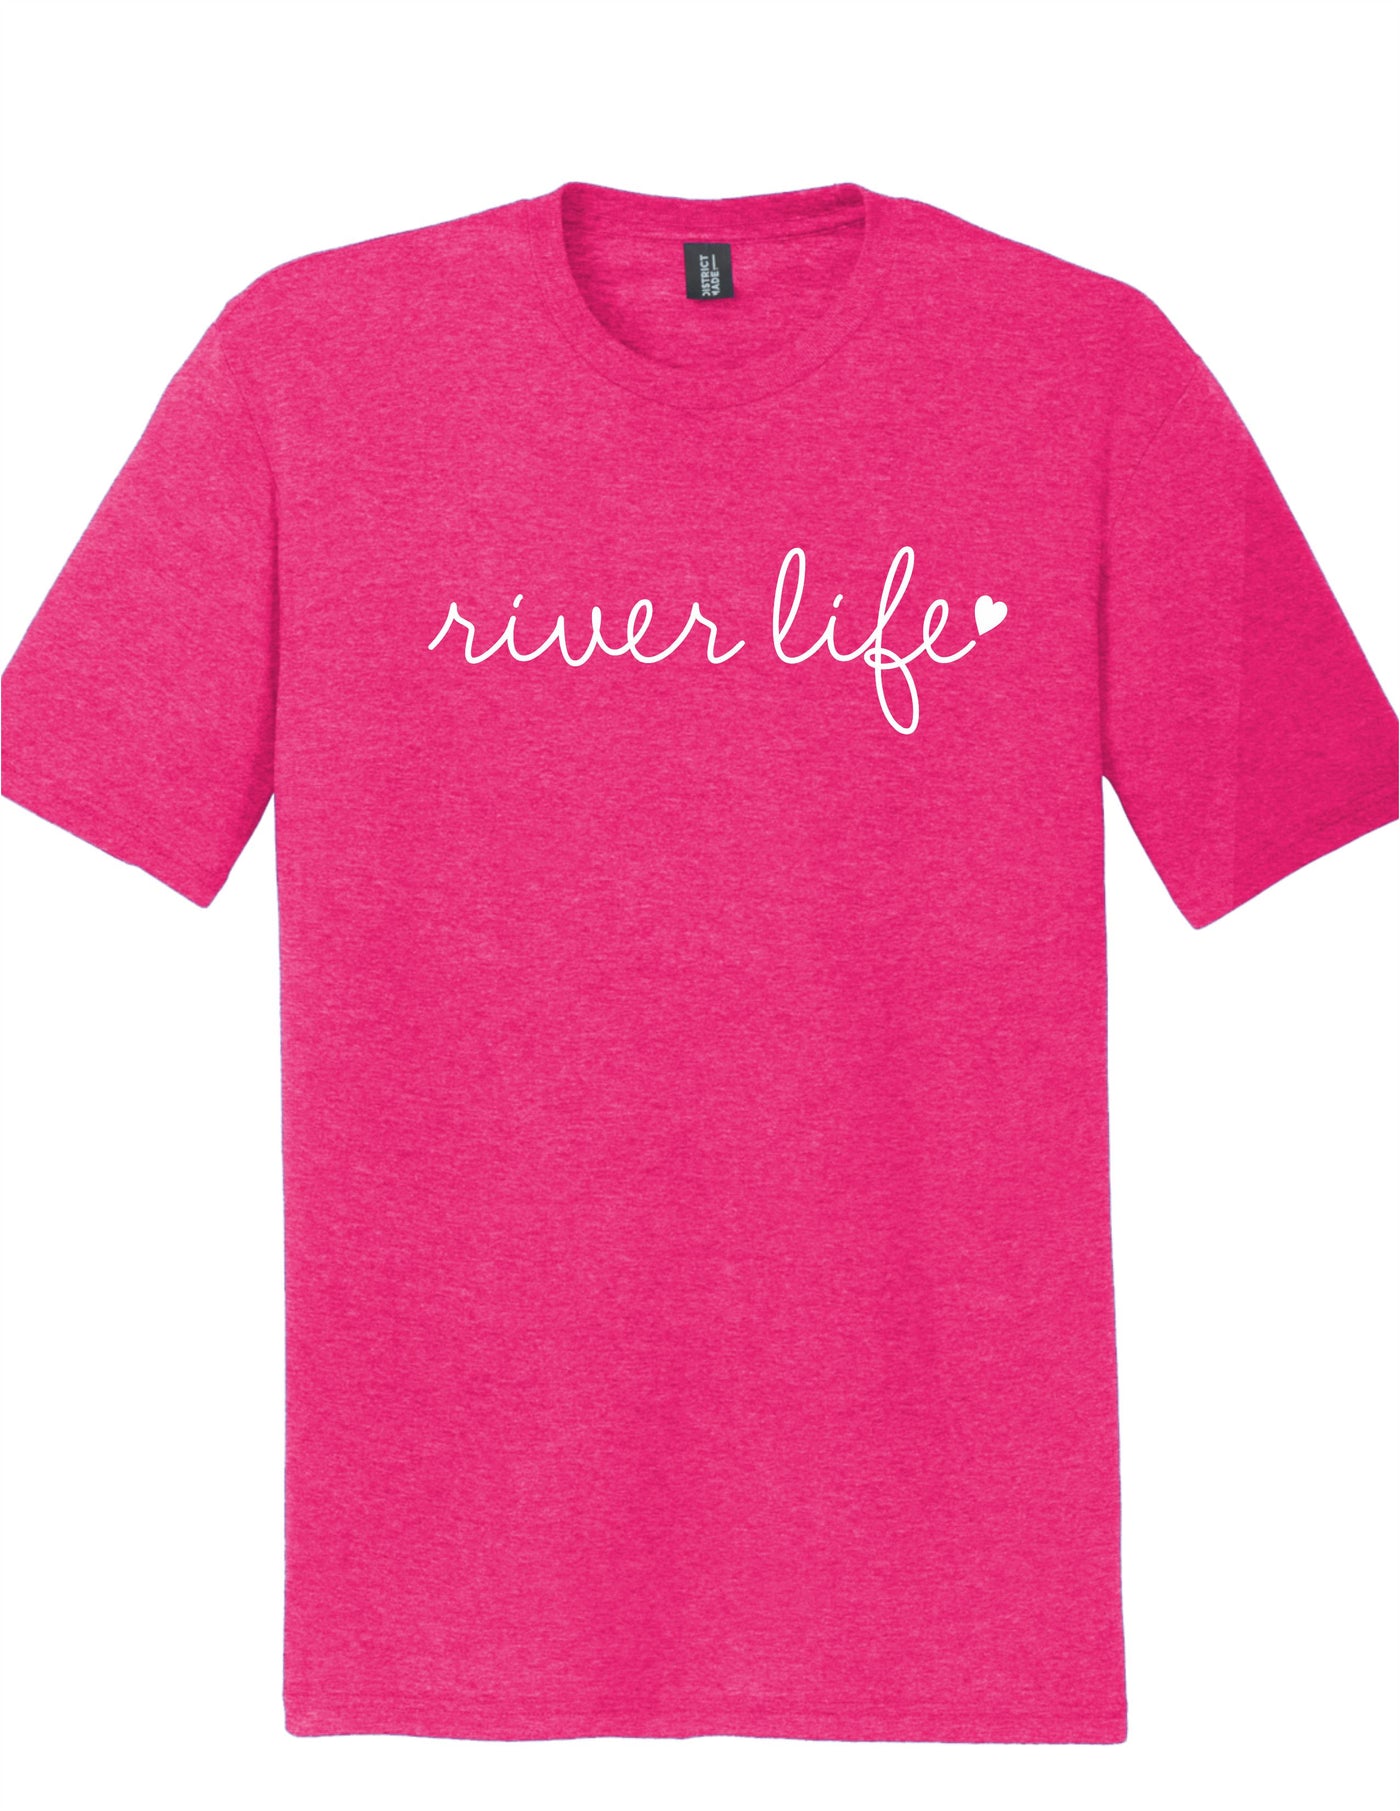 River life t-shirt